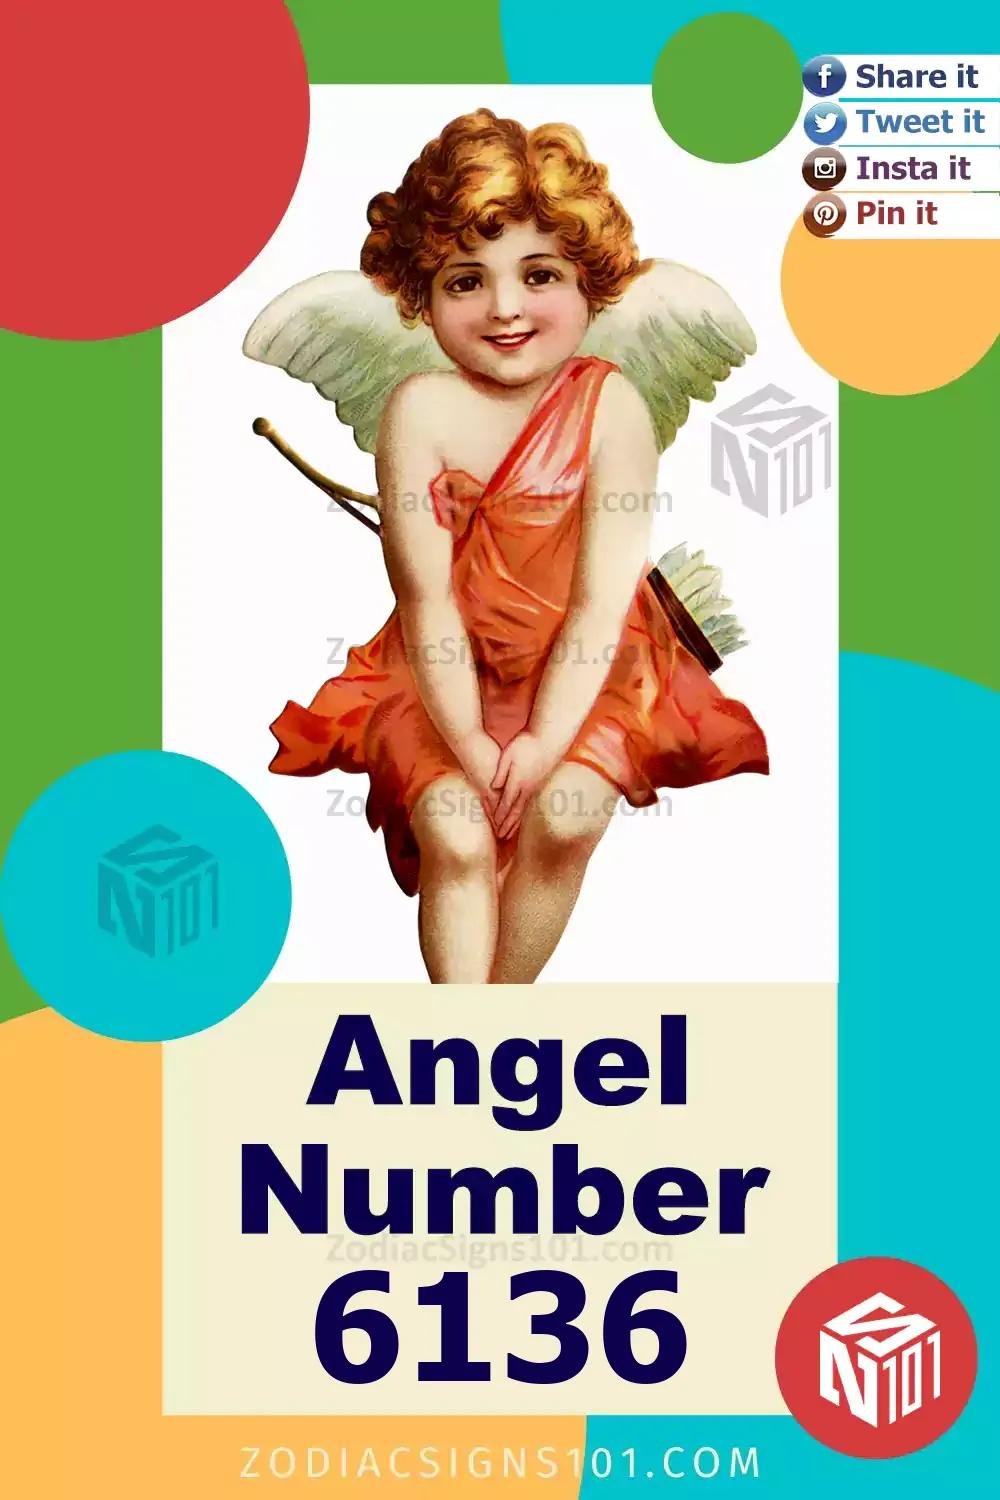 6136-Angel-Number-Meaning.jpg